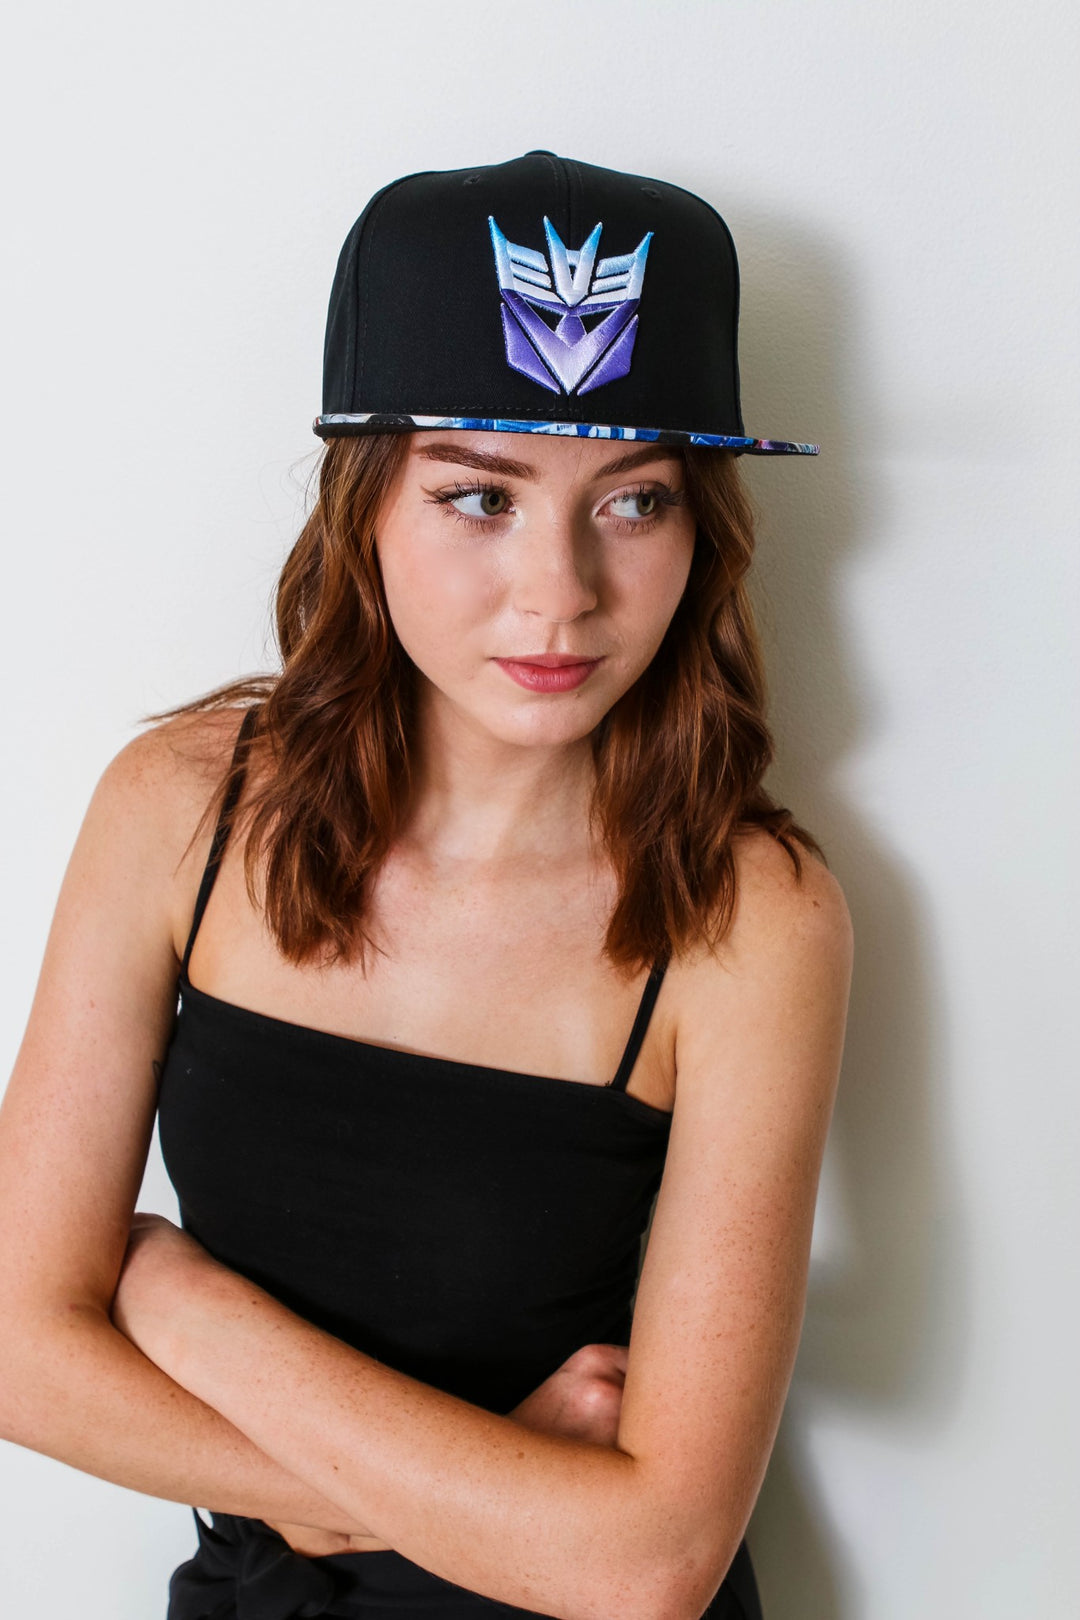 Transformers Decepticons Color Shield 80's Cartoon Black Snapback Cap Hat